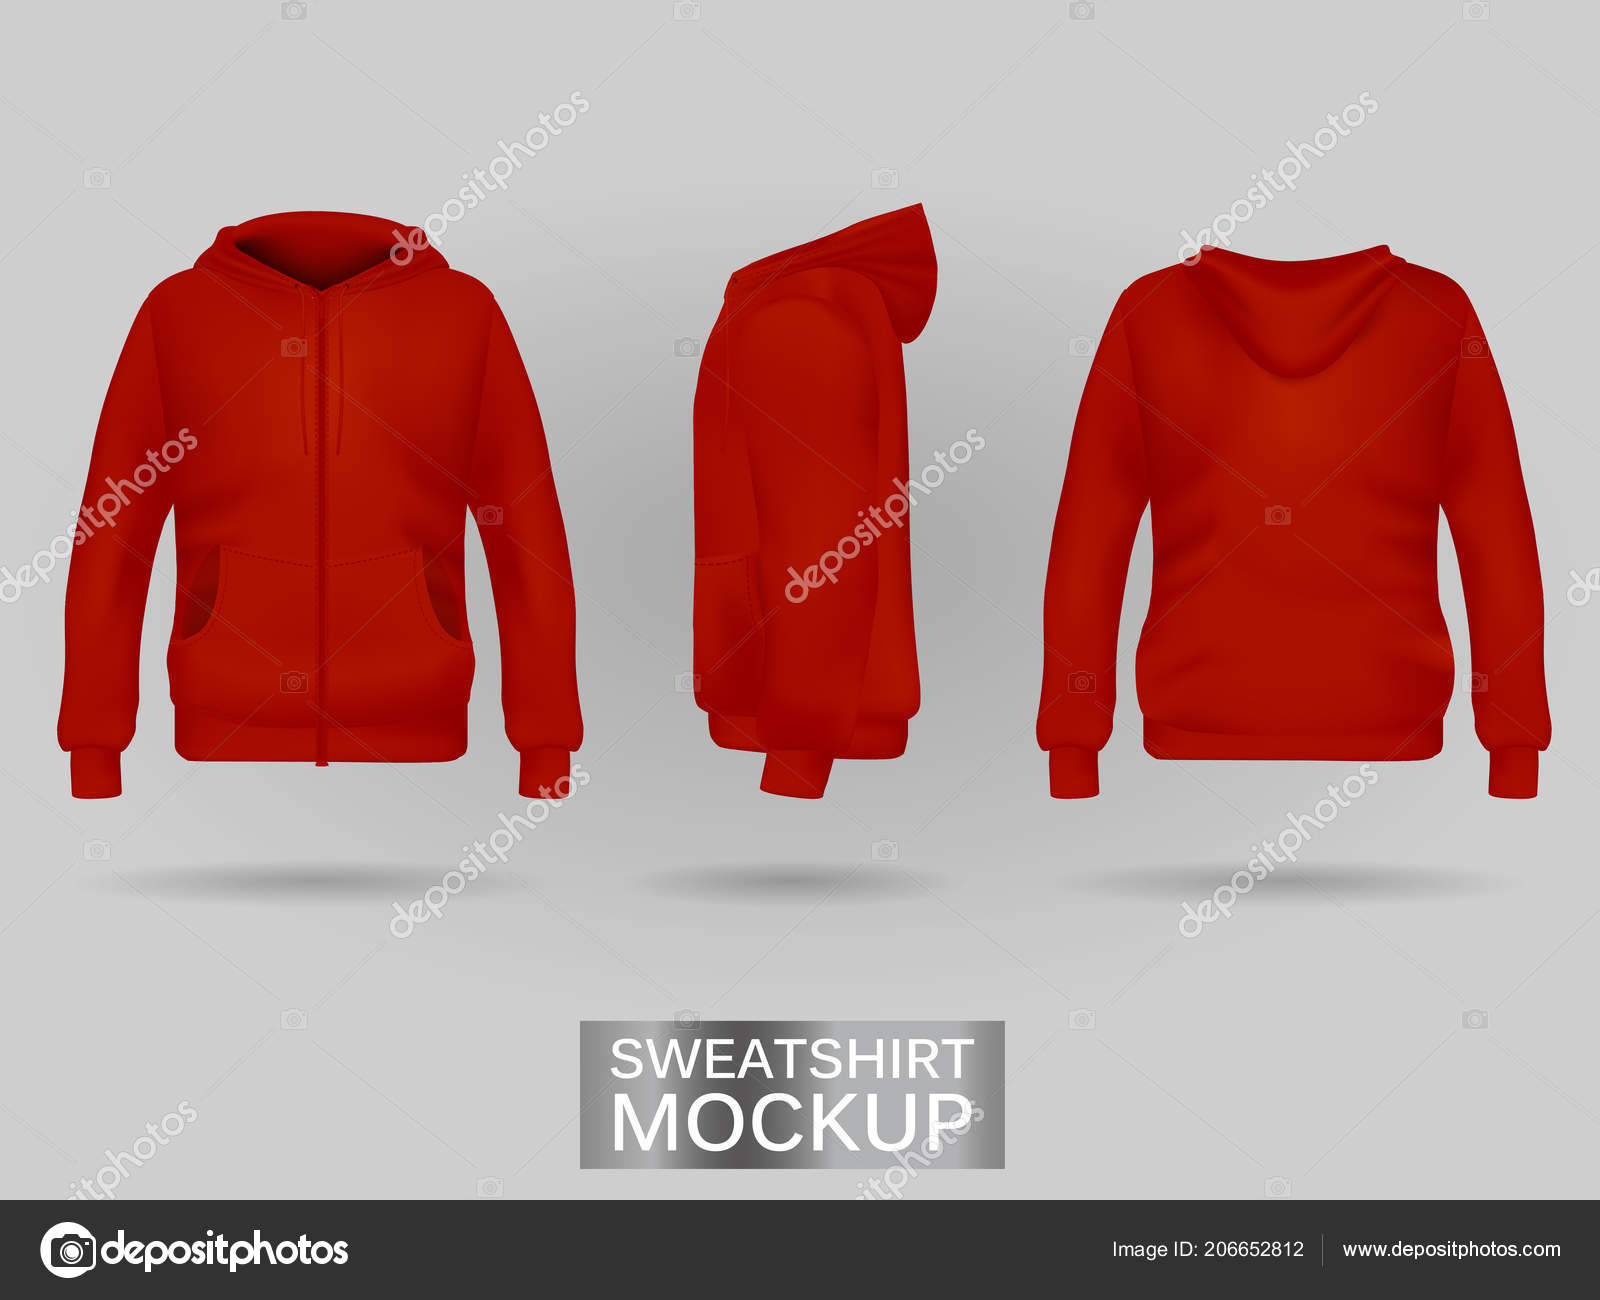 https://st4.depositphotos.com/15923144/20665/v/1600/depositphotos_206652812-stock-illustration-red-sweatshirt-hoodie-template.jpg